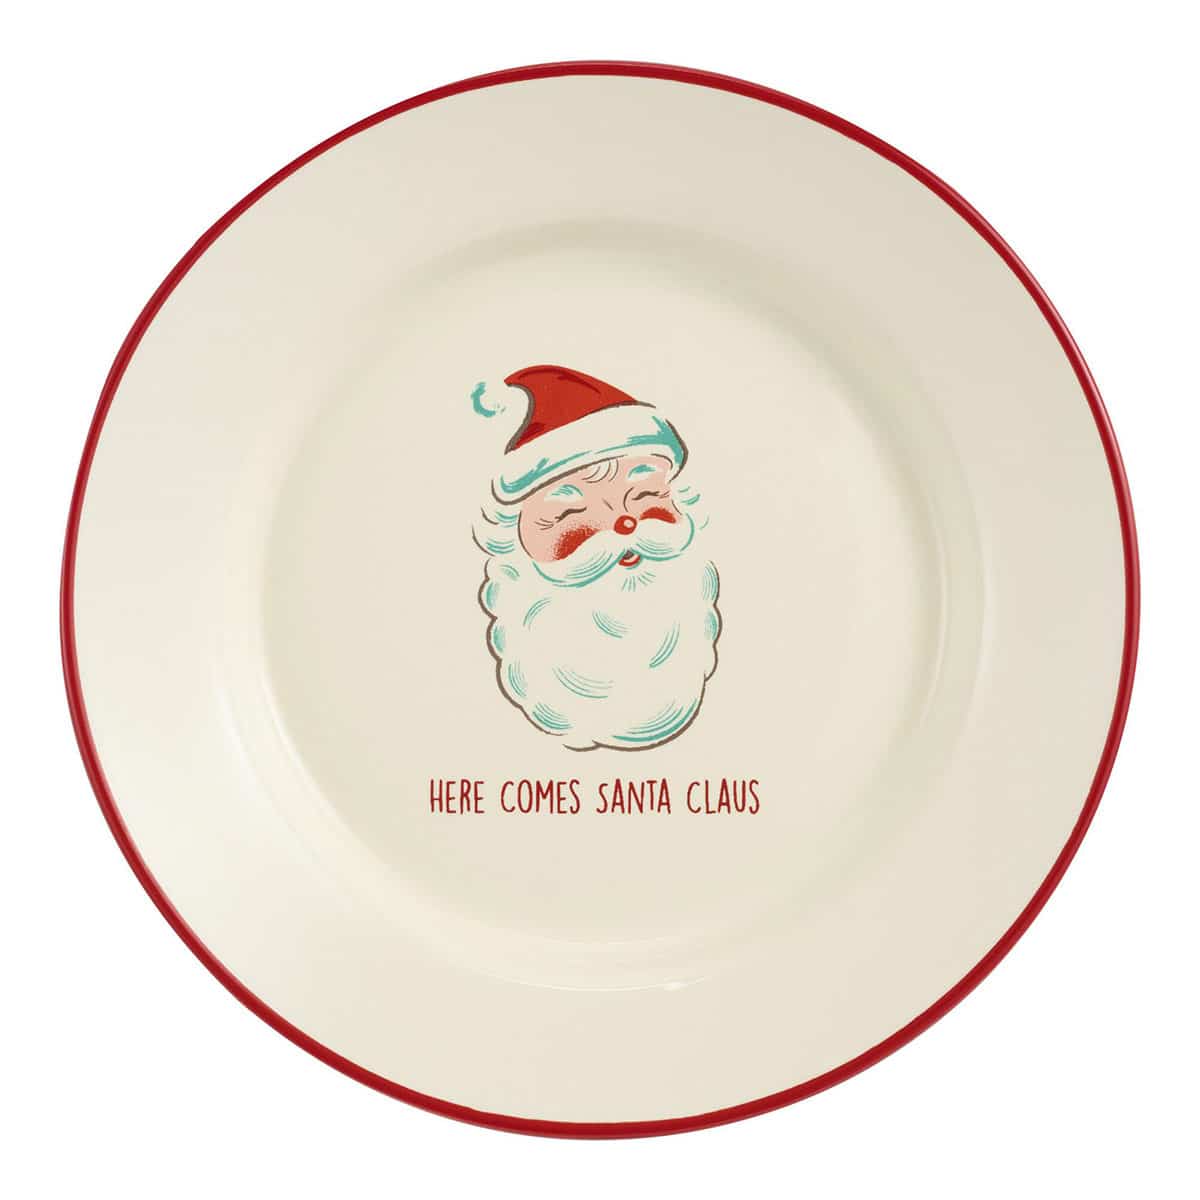 Santa Claus plates with a retro Santa image on them.